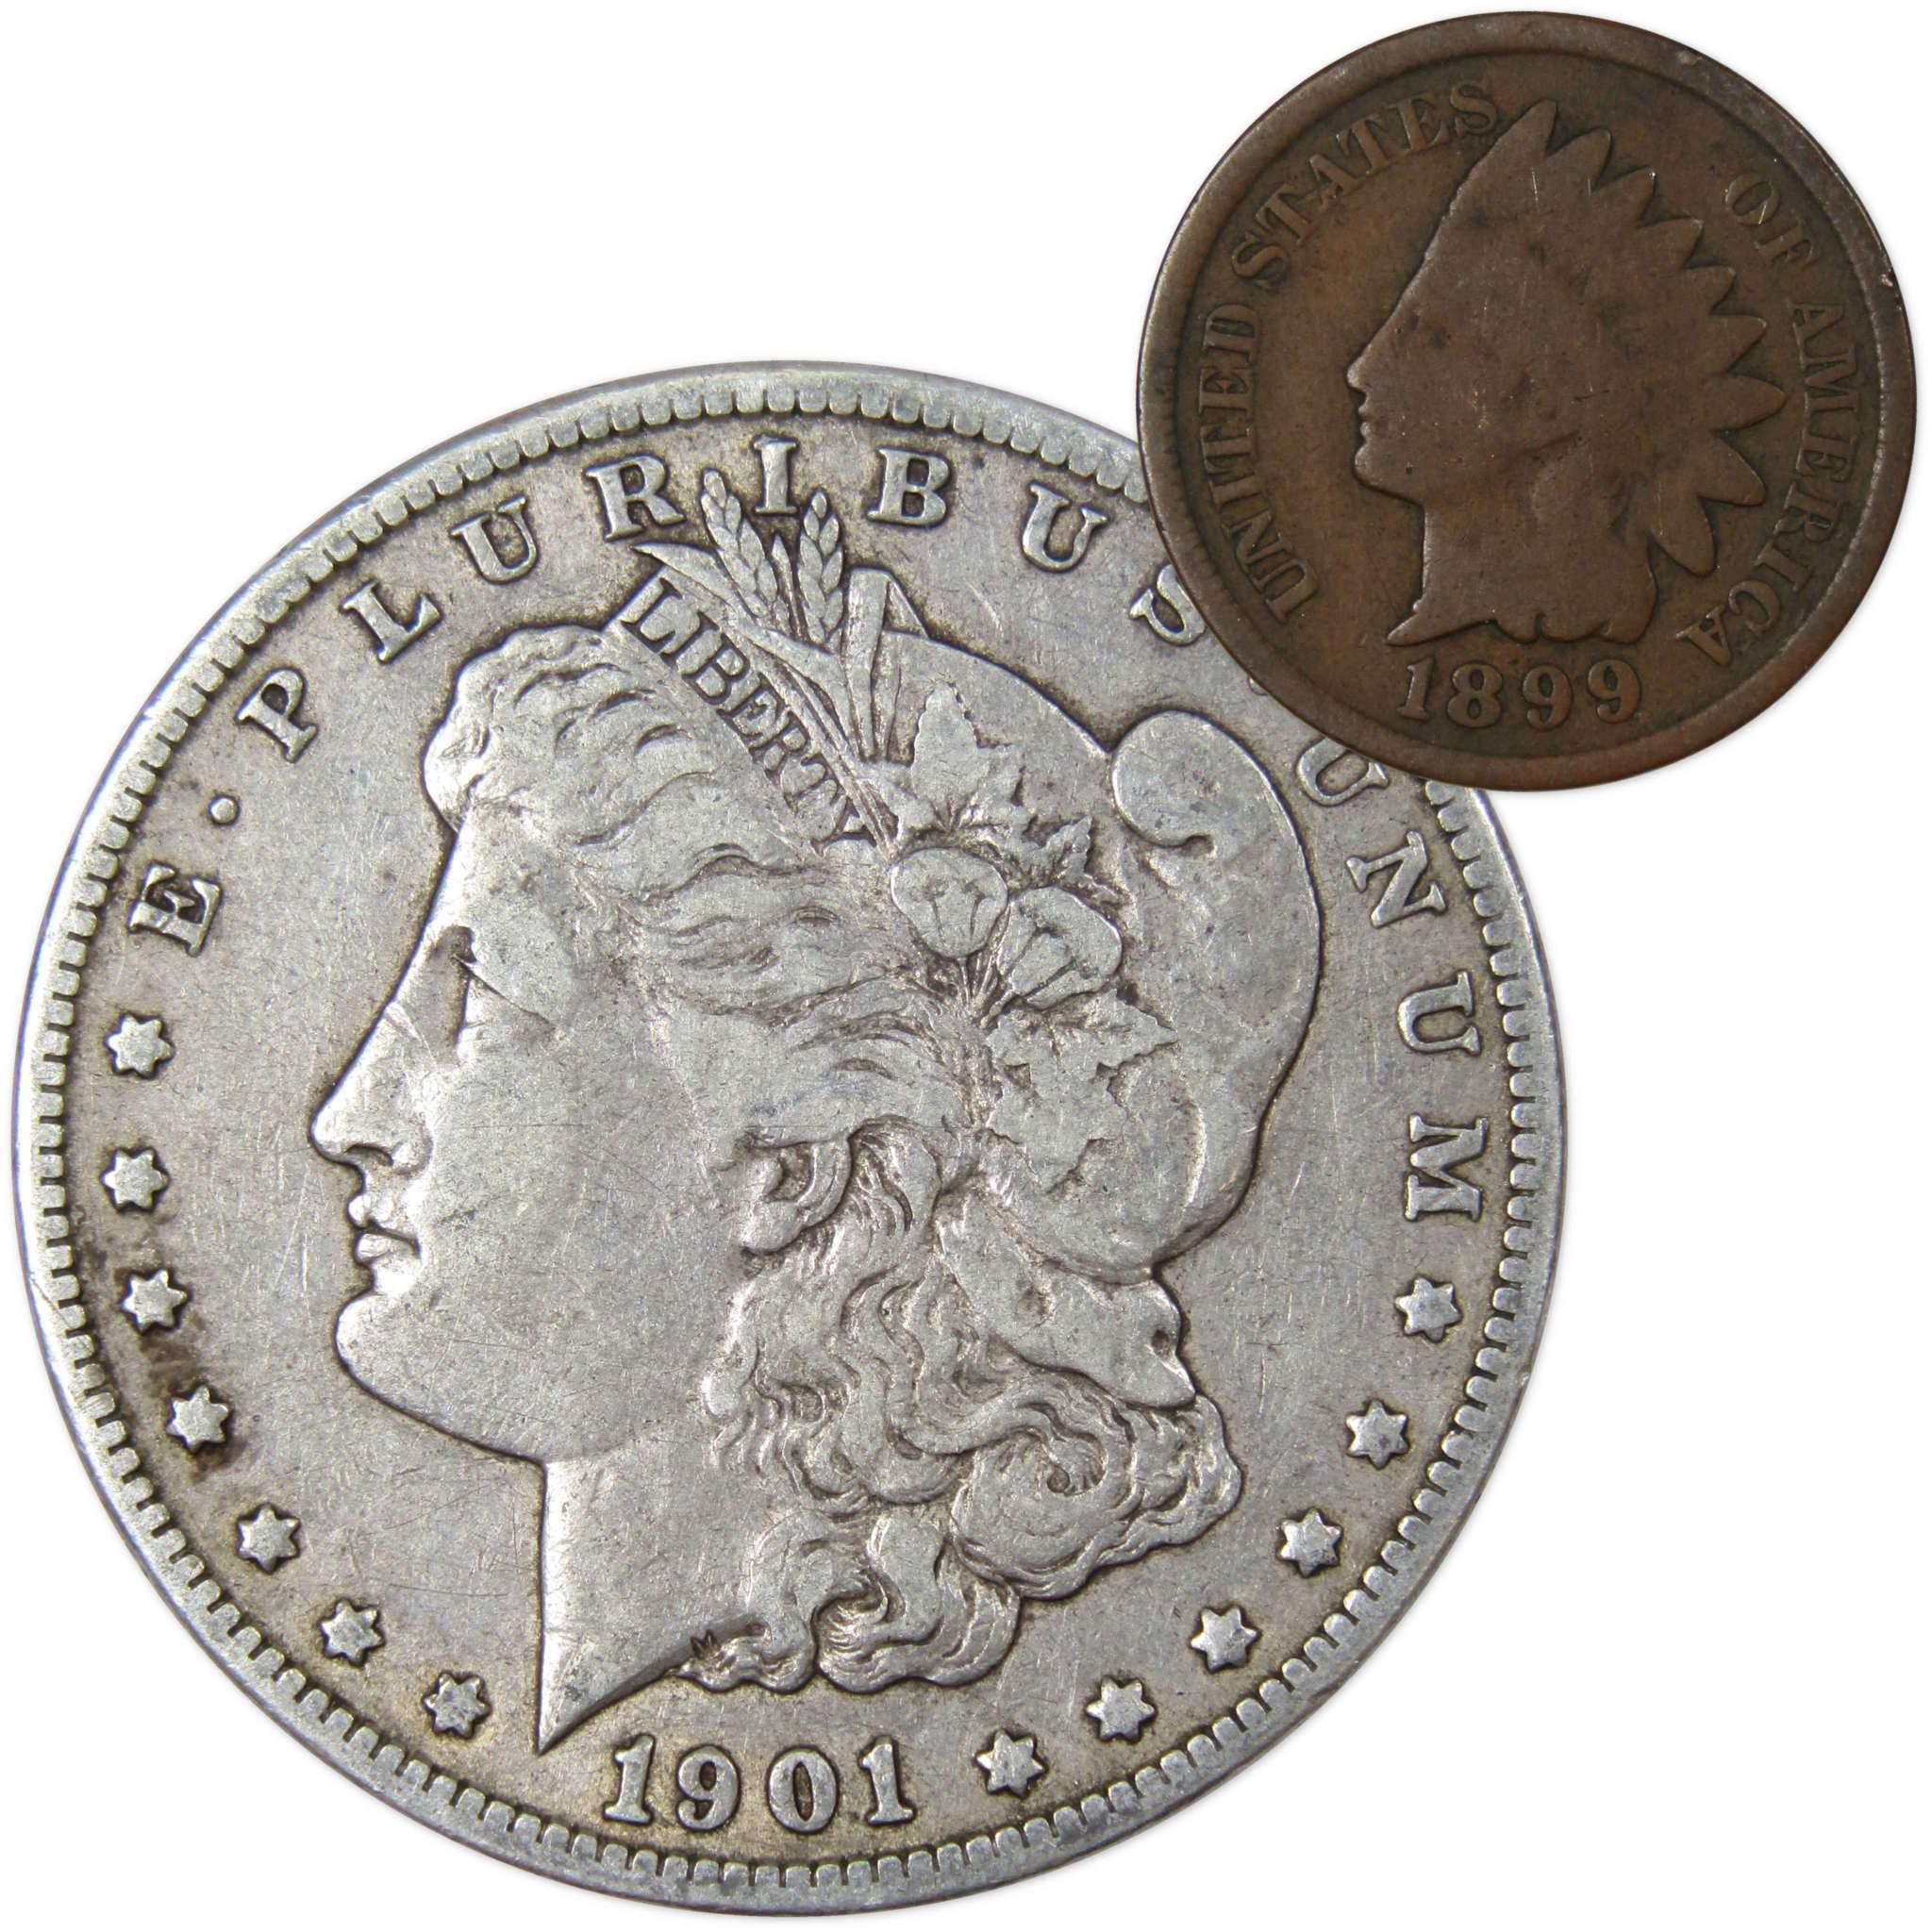 1901 O Morgan Dollar F Fine 90% Silver Coin with 1899 Indian Head Cent G Good - Morgan coin - Morgan silver dollar - Morgan silver dollar for sale - Profile Coins &amp; Collectibles